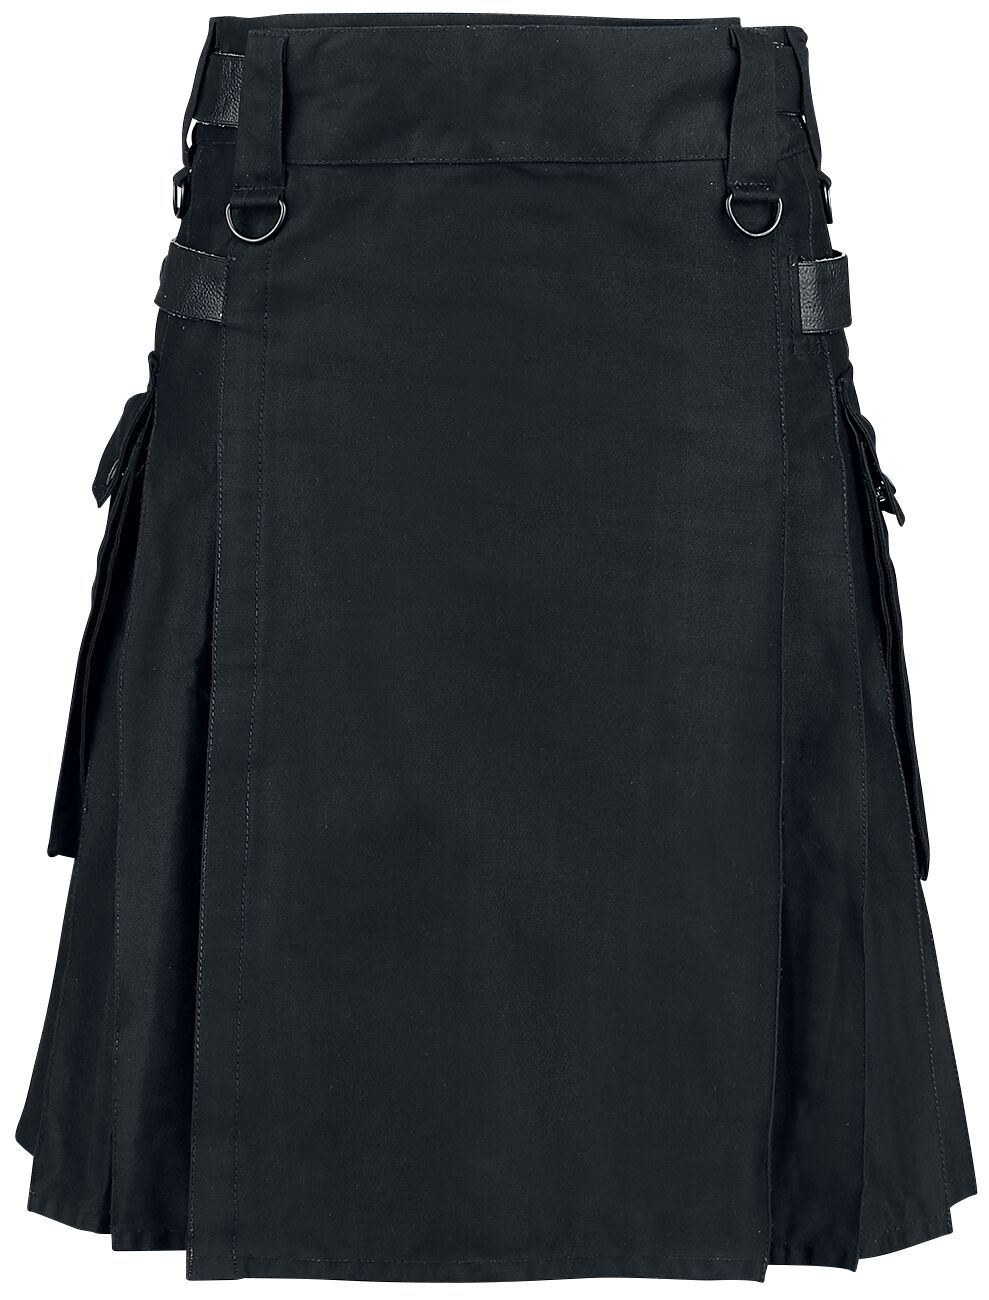 Altana Industries Black Kilt Medium-length skirt black